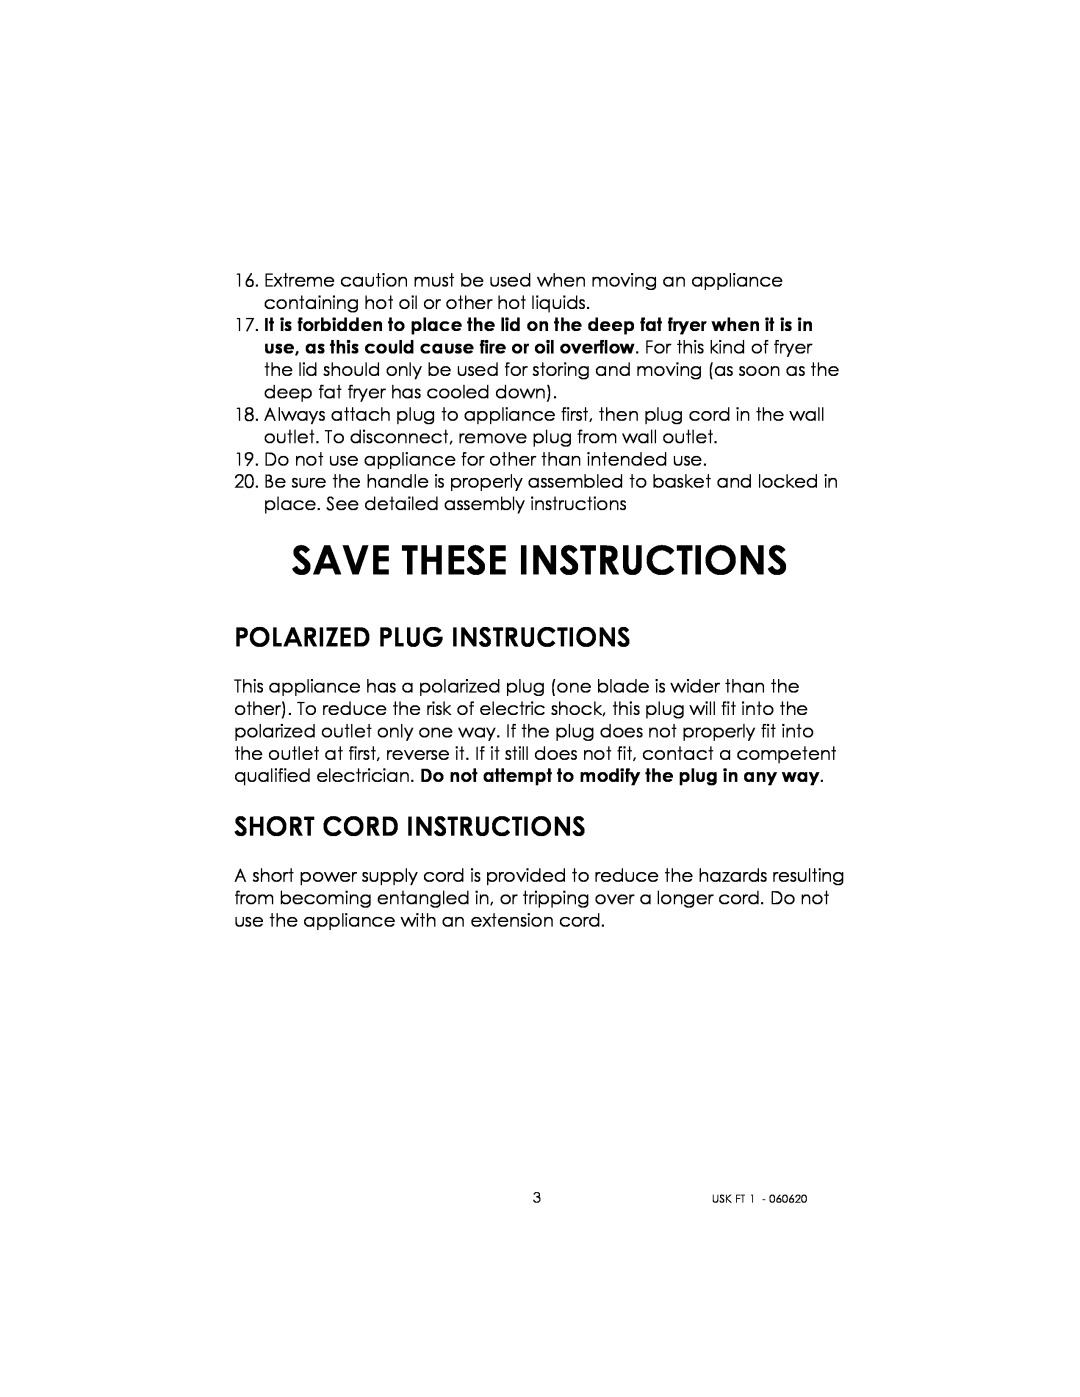 Kalorik USK FT 1 manual Save These Instructions, Polarized Plug Instructions, Short Cord Instructions 